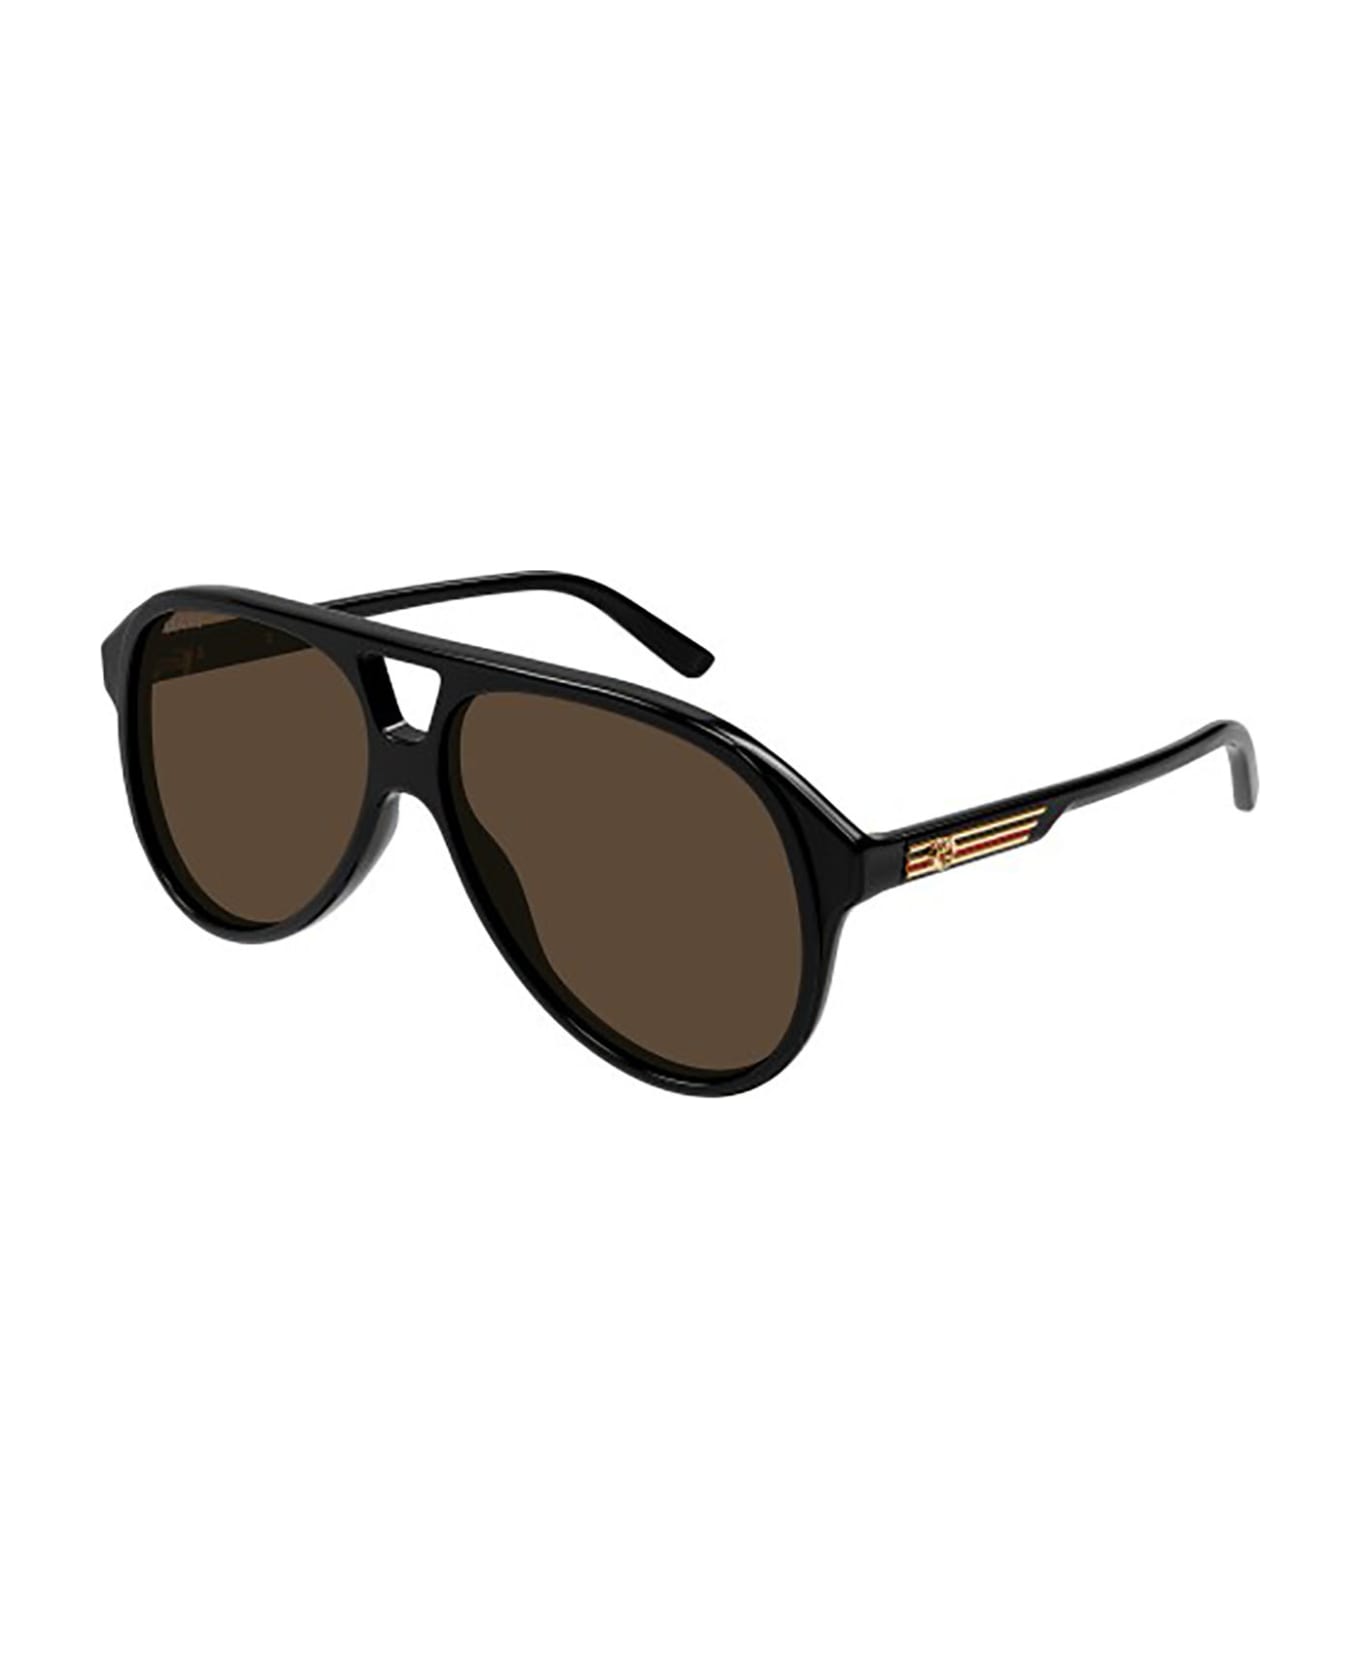 Gucci Eyewear Gg1286s Sunglasses - 001 black black brown